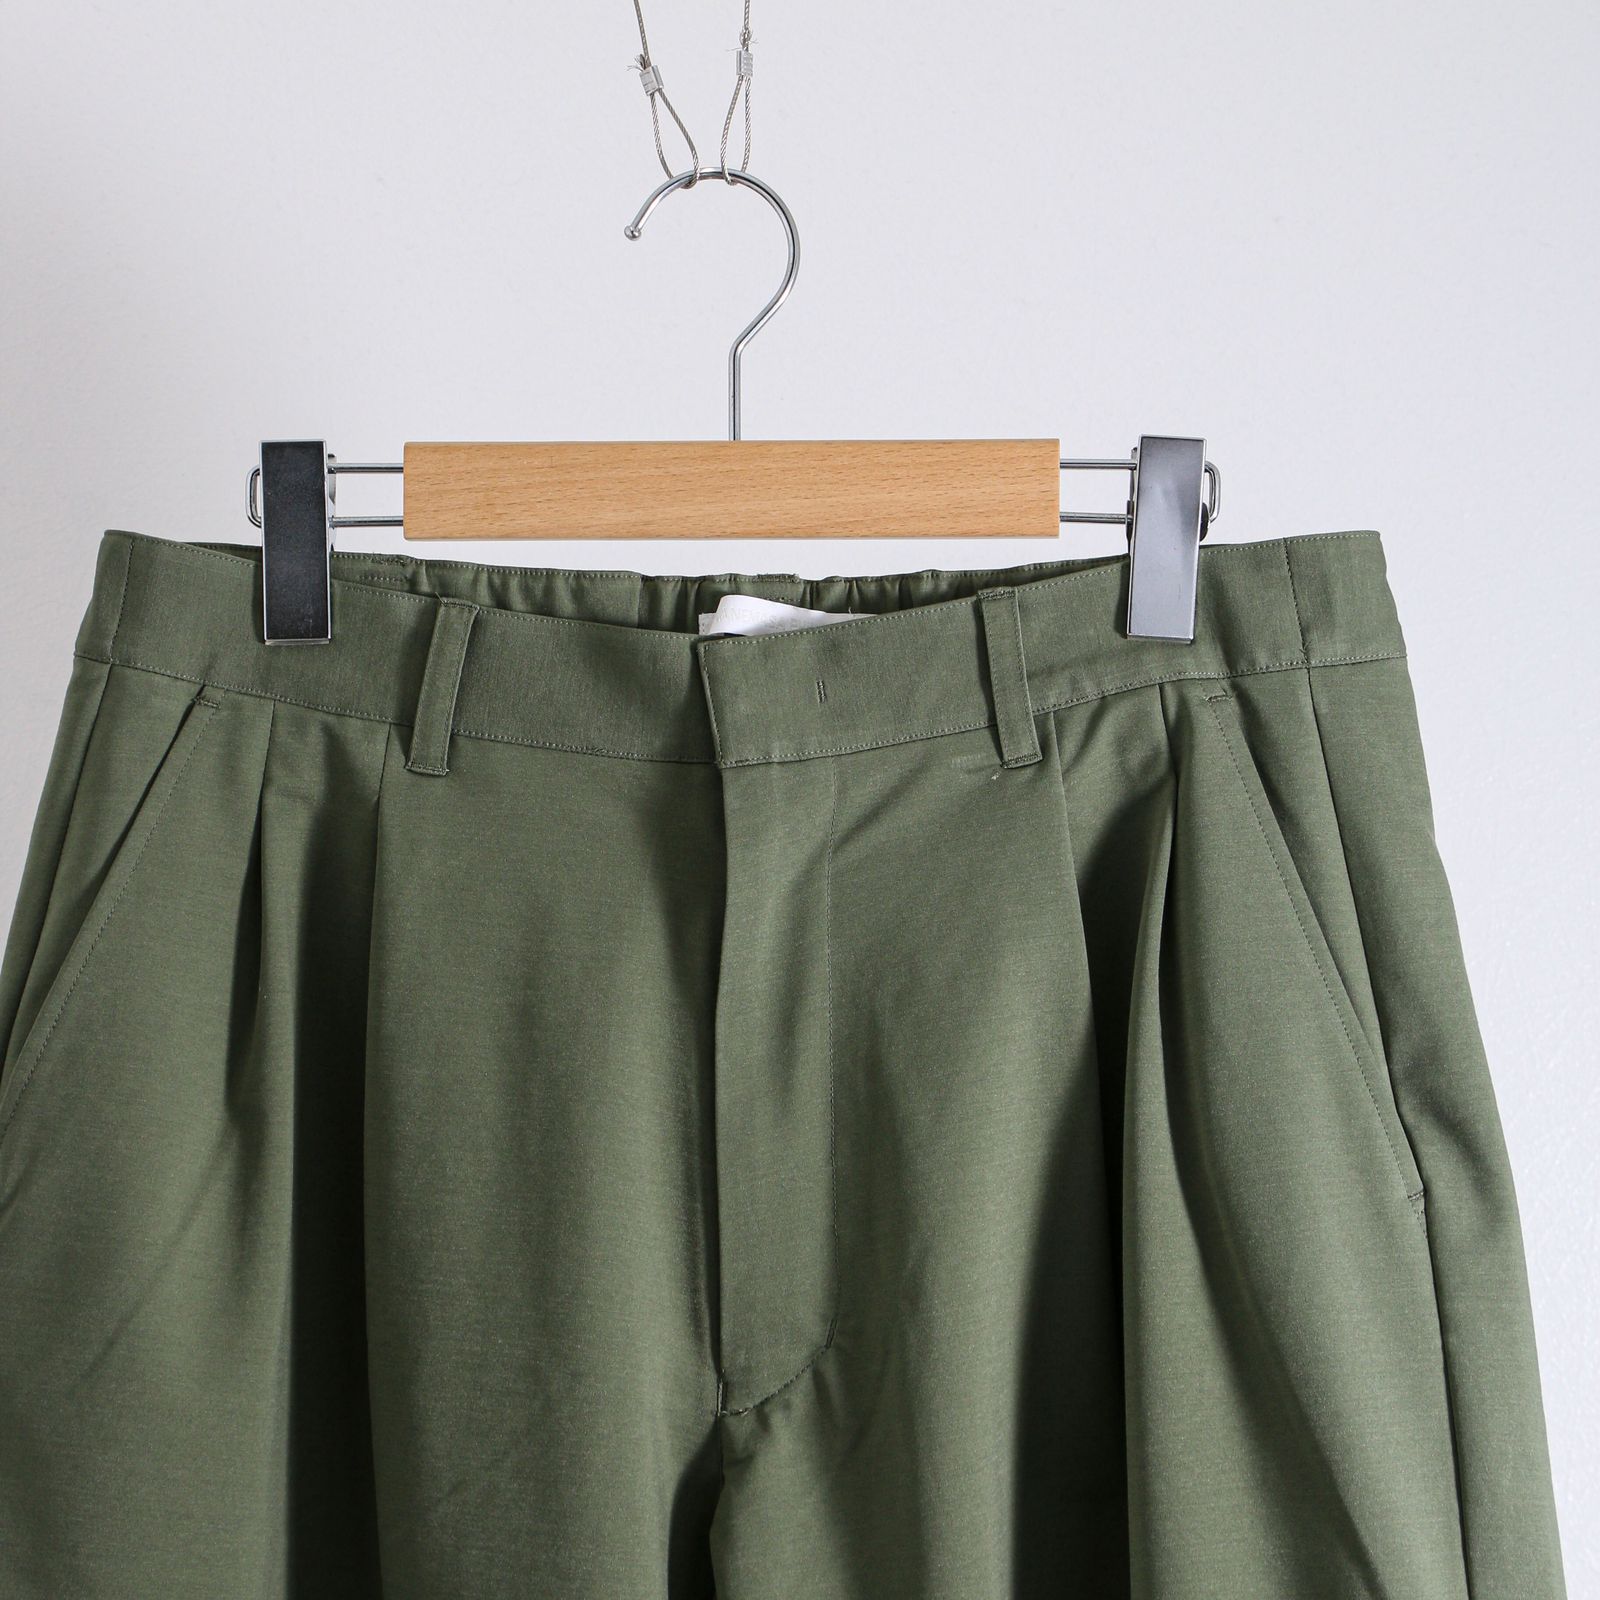 KANEMASA PHIL. - 46G Typewriter Jersey 2Tuck shorts GREEN / ツータック / ショーツ |  koko